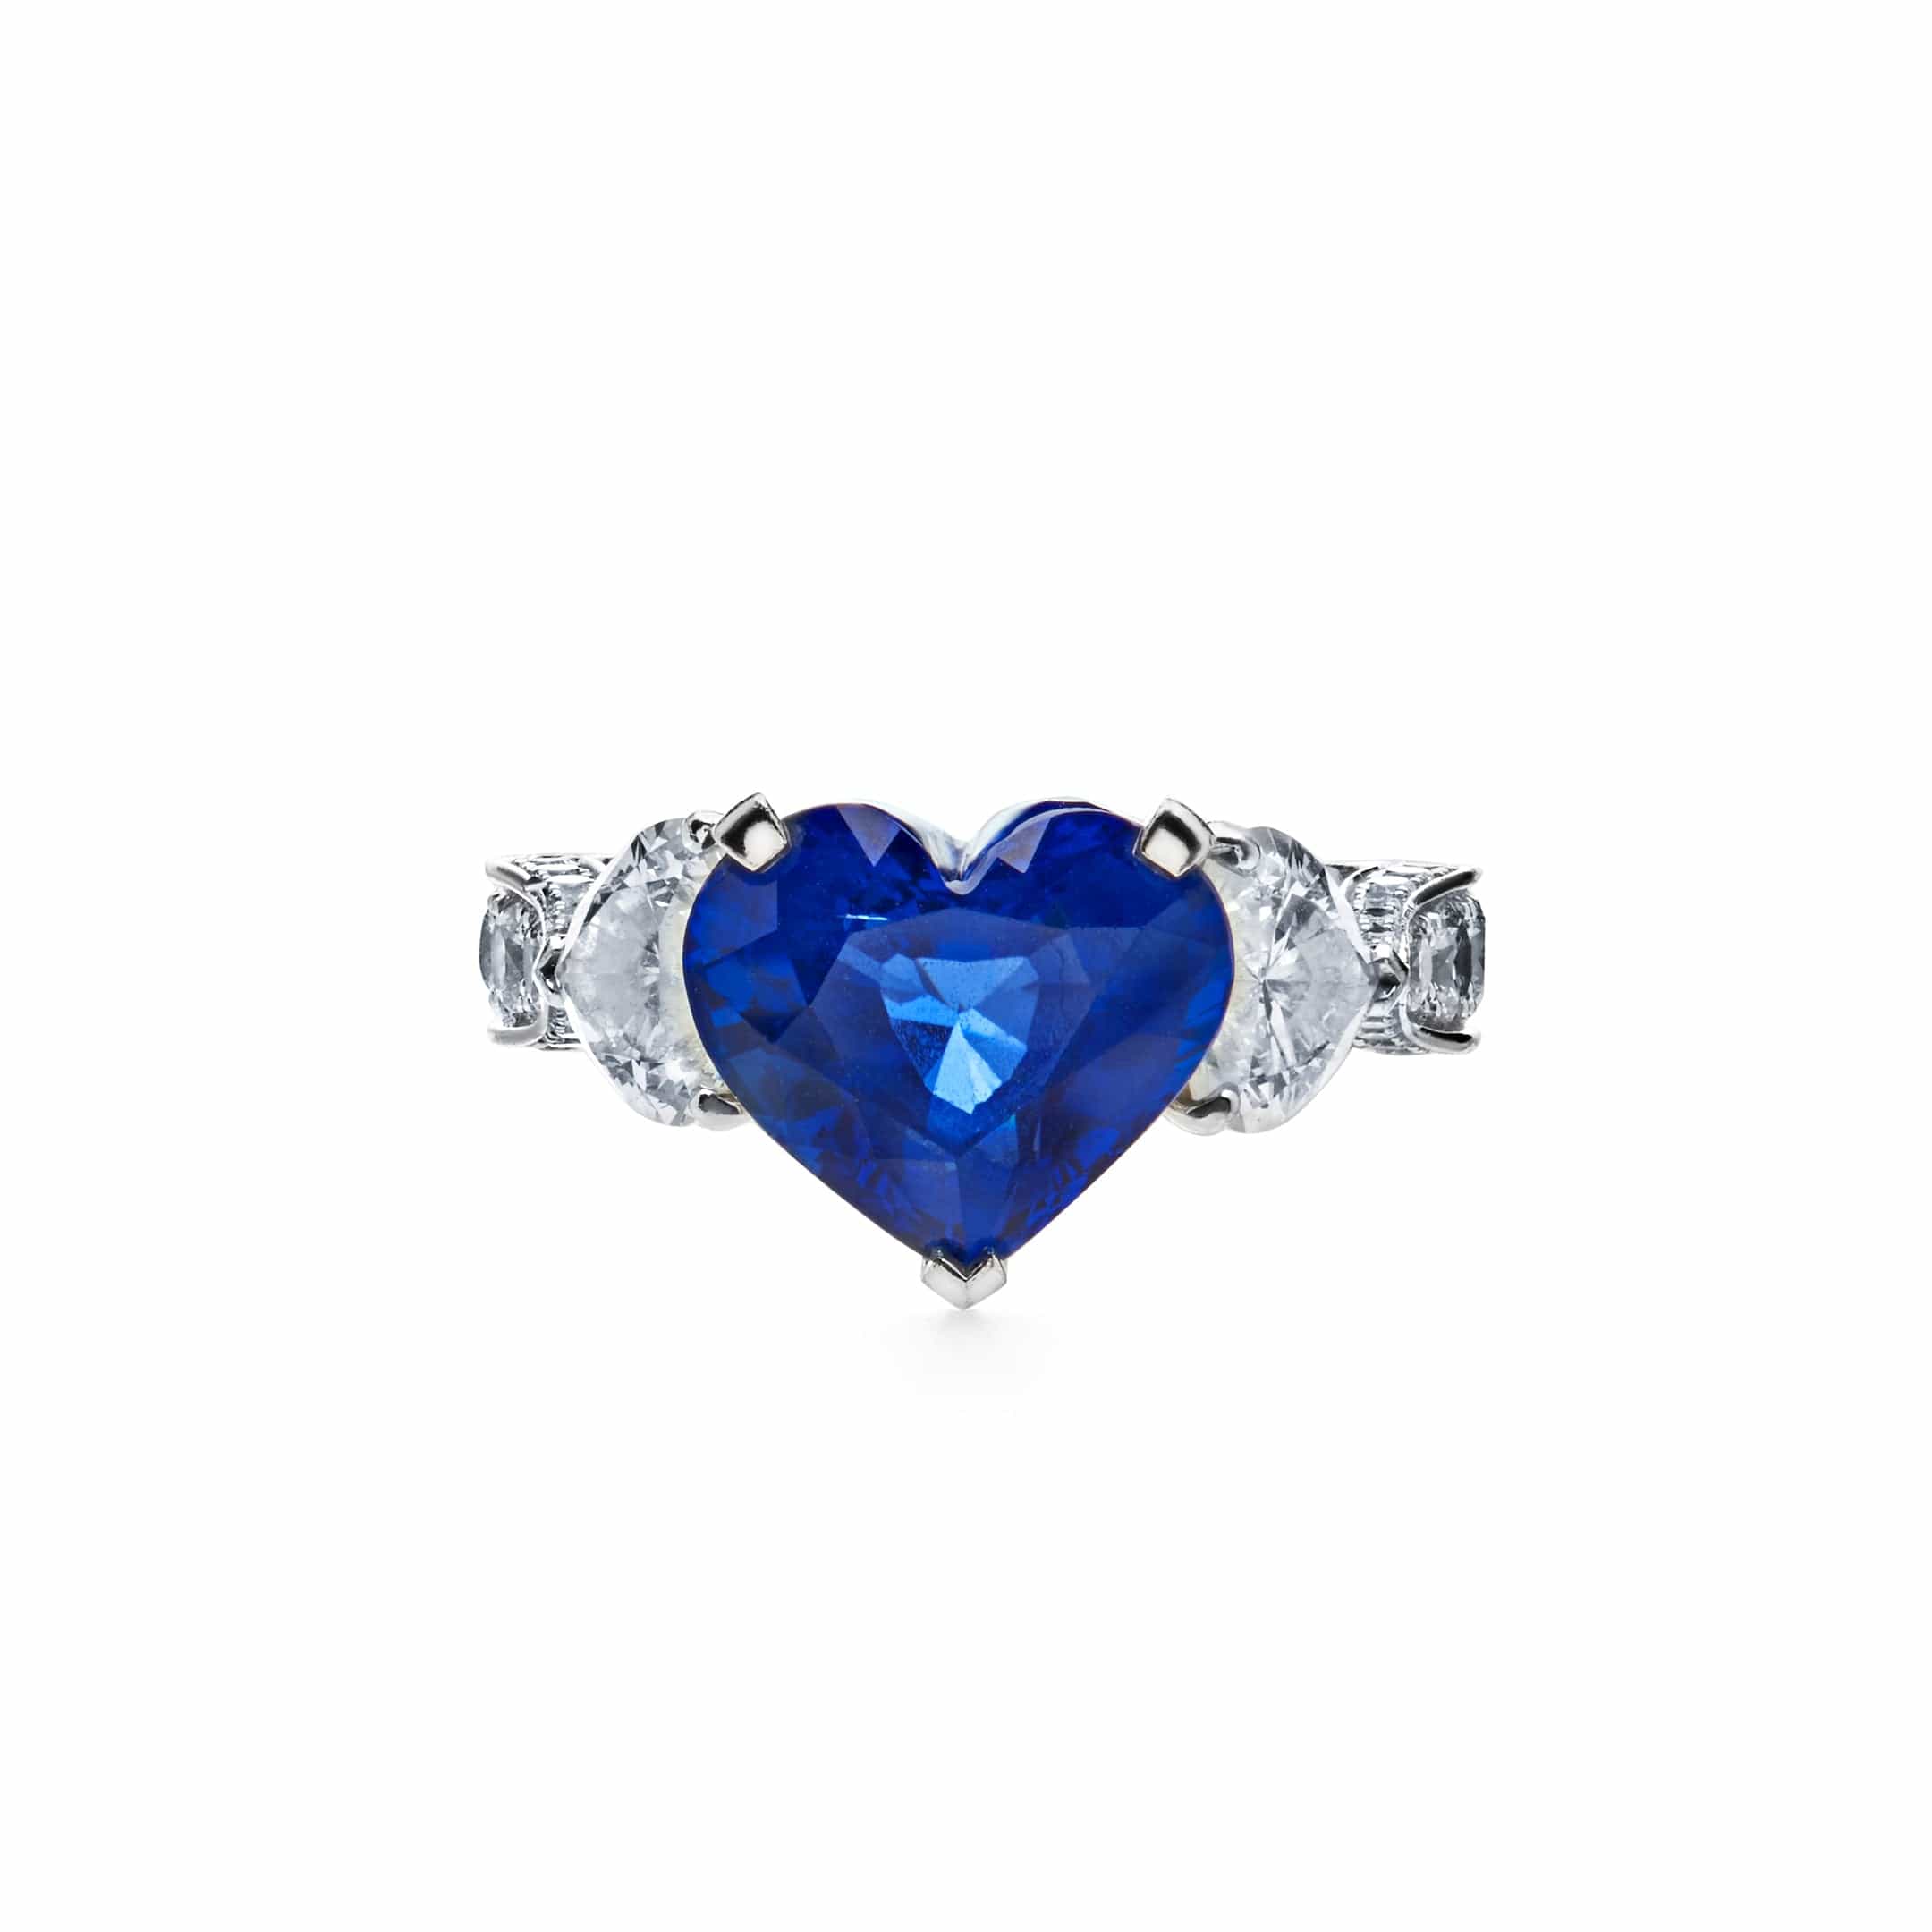 Unique 1 carat Diamond and Sapphire Halo Engagement Ring